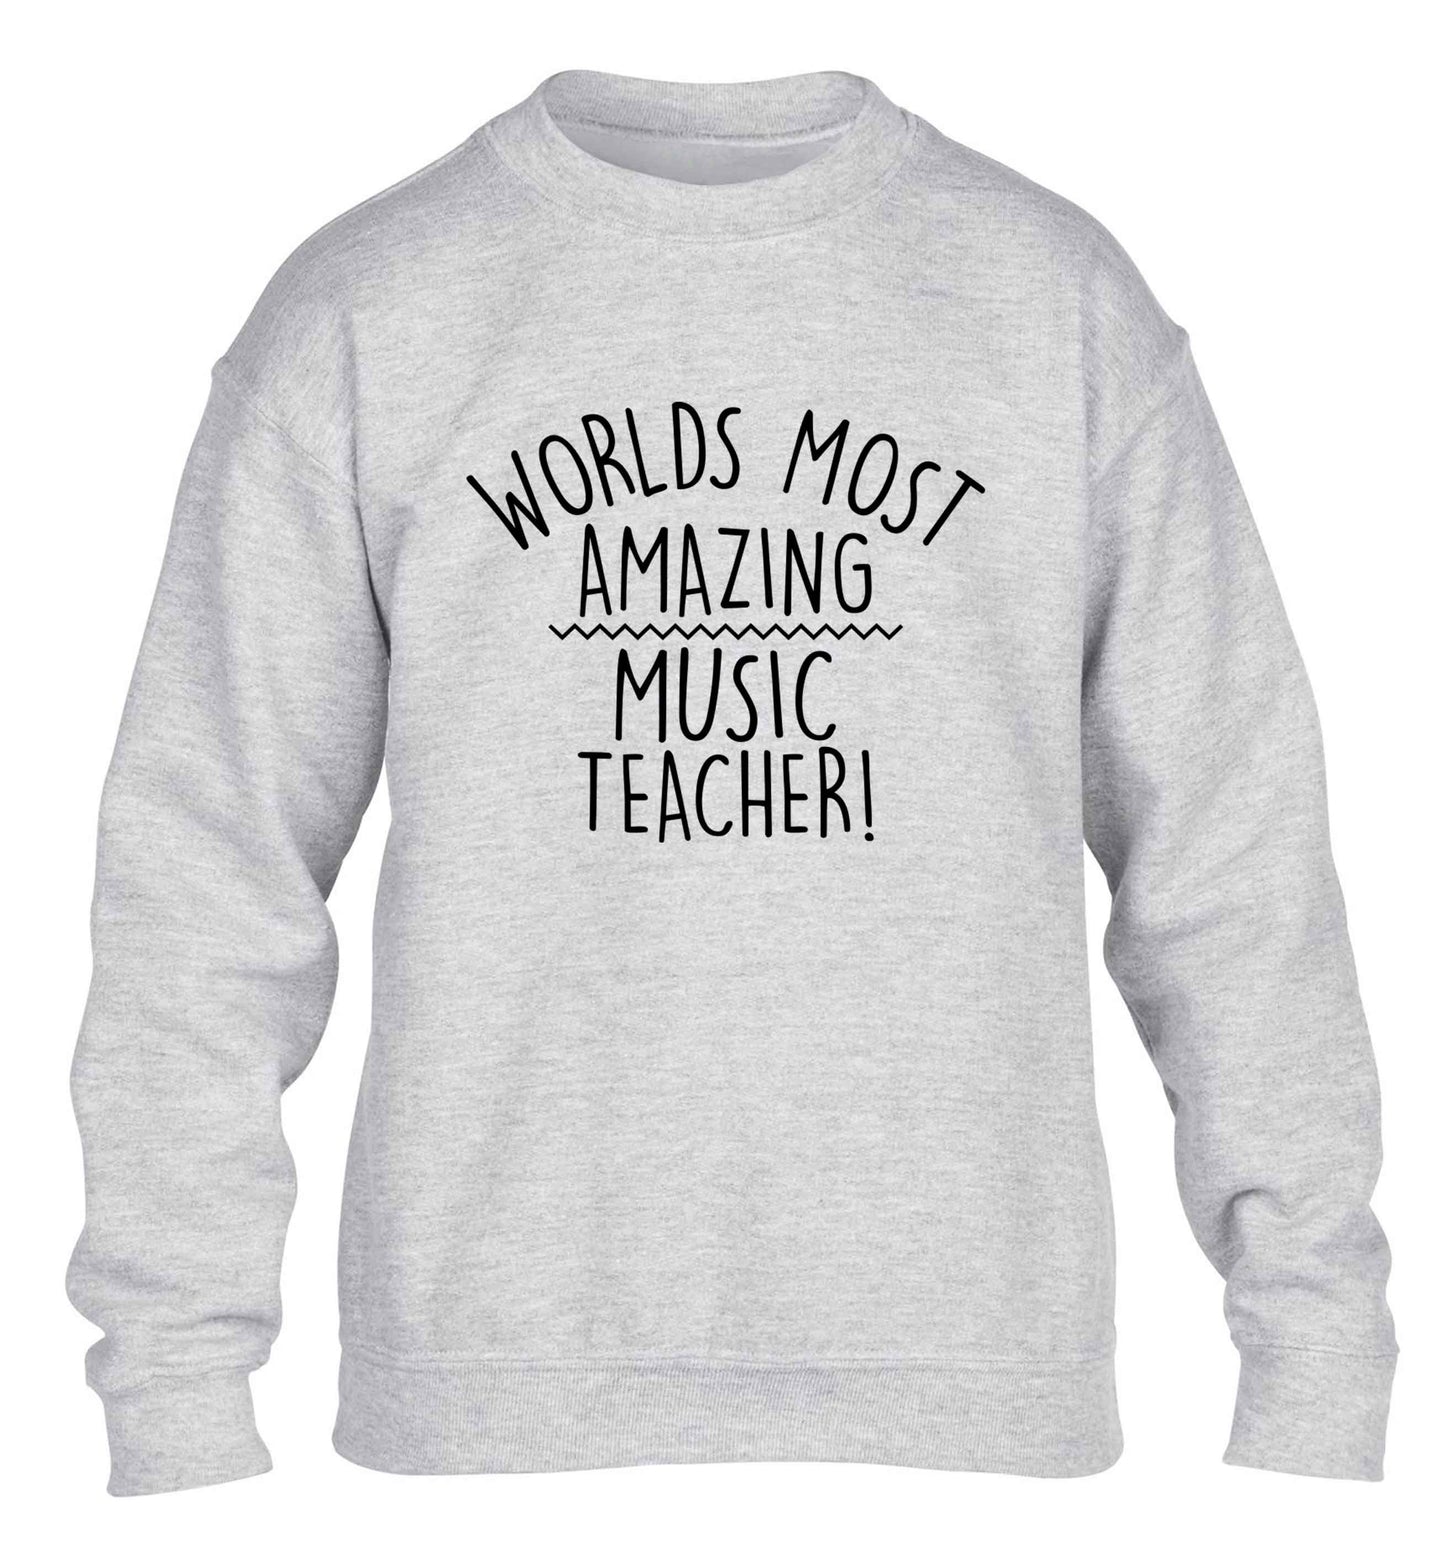 Worlds most amazing music teacher children's grey sweater 12-13 Years